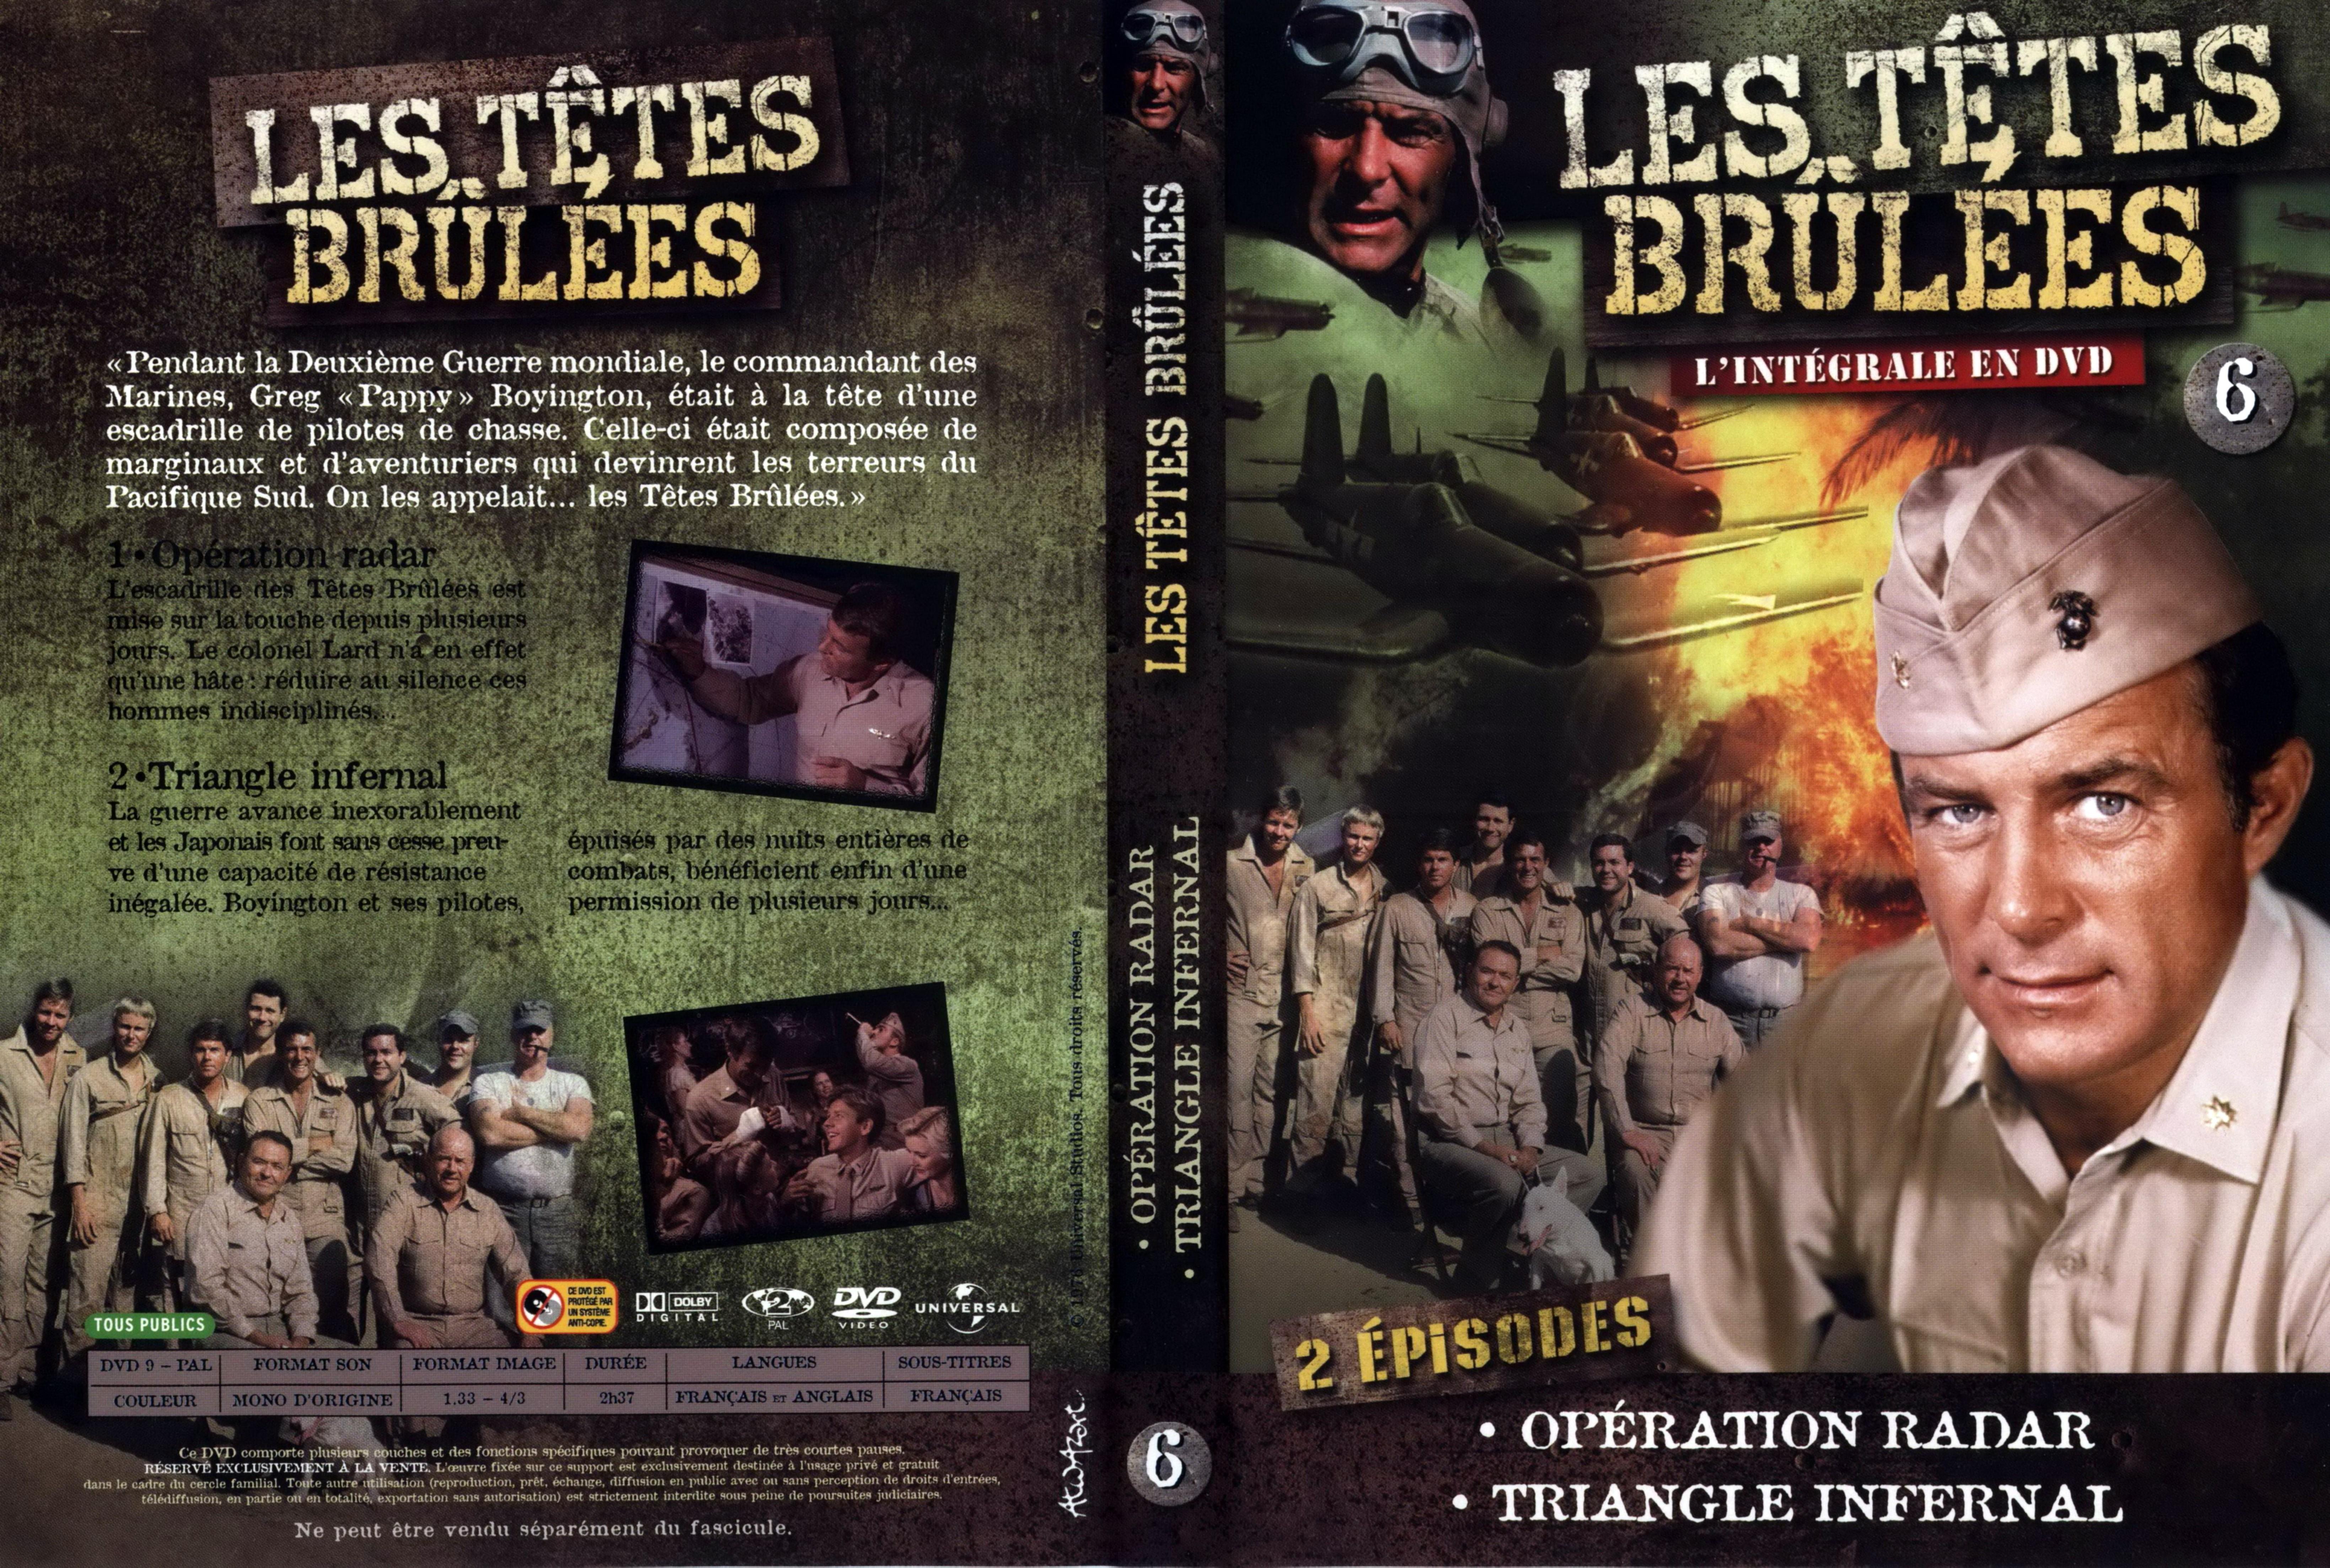 Jaquette DVD Les ttes brulees Intgrale vol 06